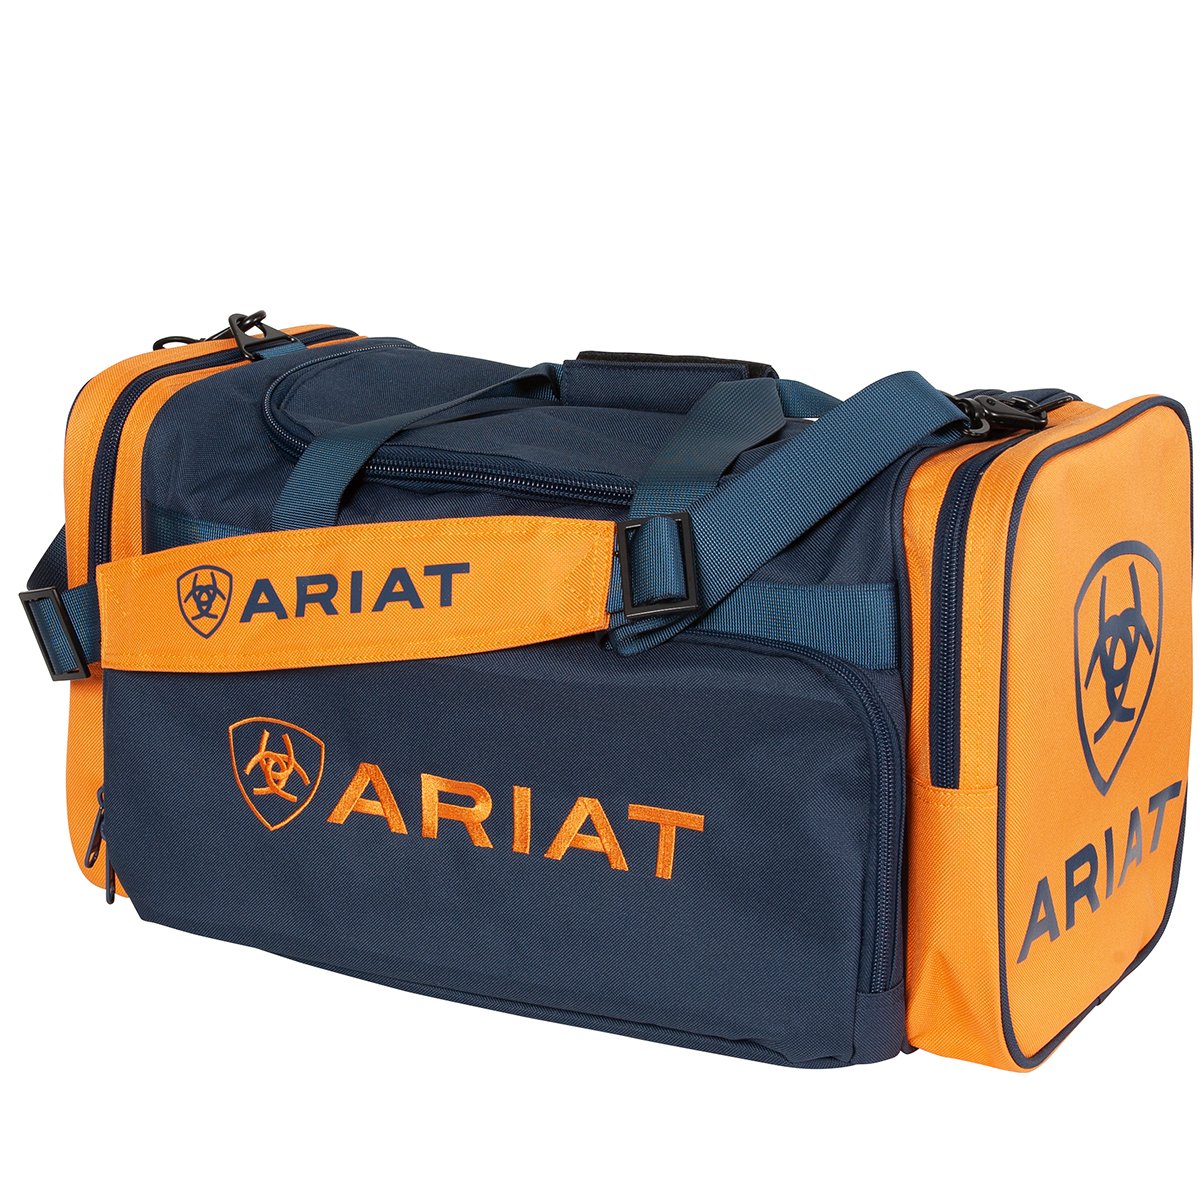 Ariat Junior Gear Bag - Navy/Orange